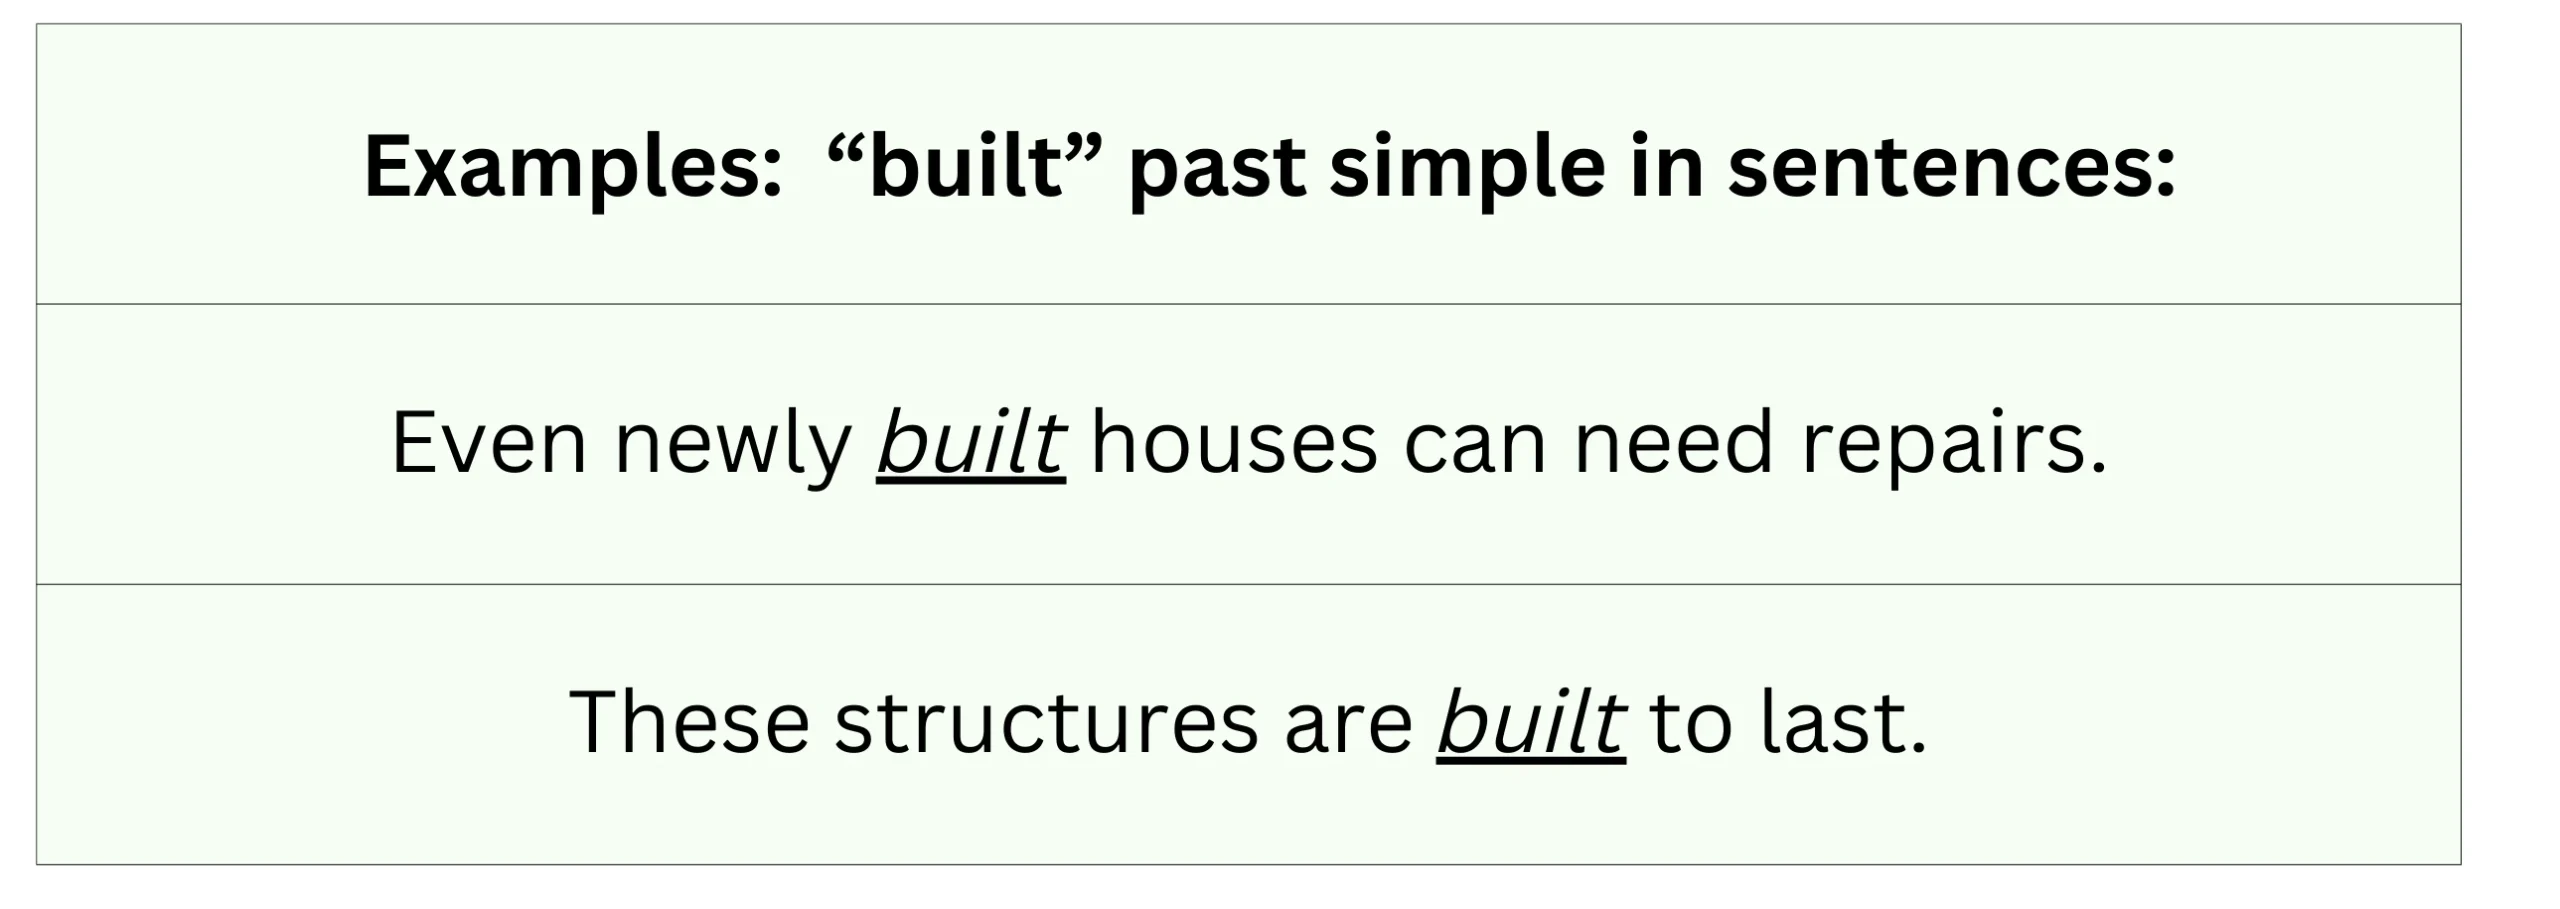 Examples of "built" in sentences (past tense). 